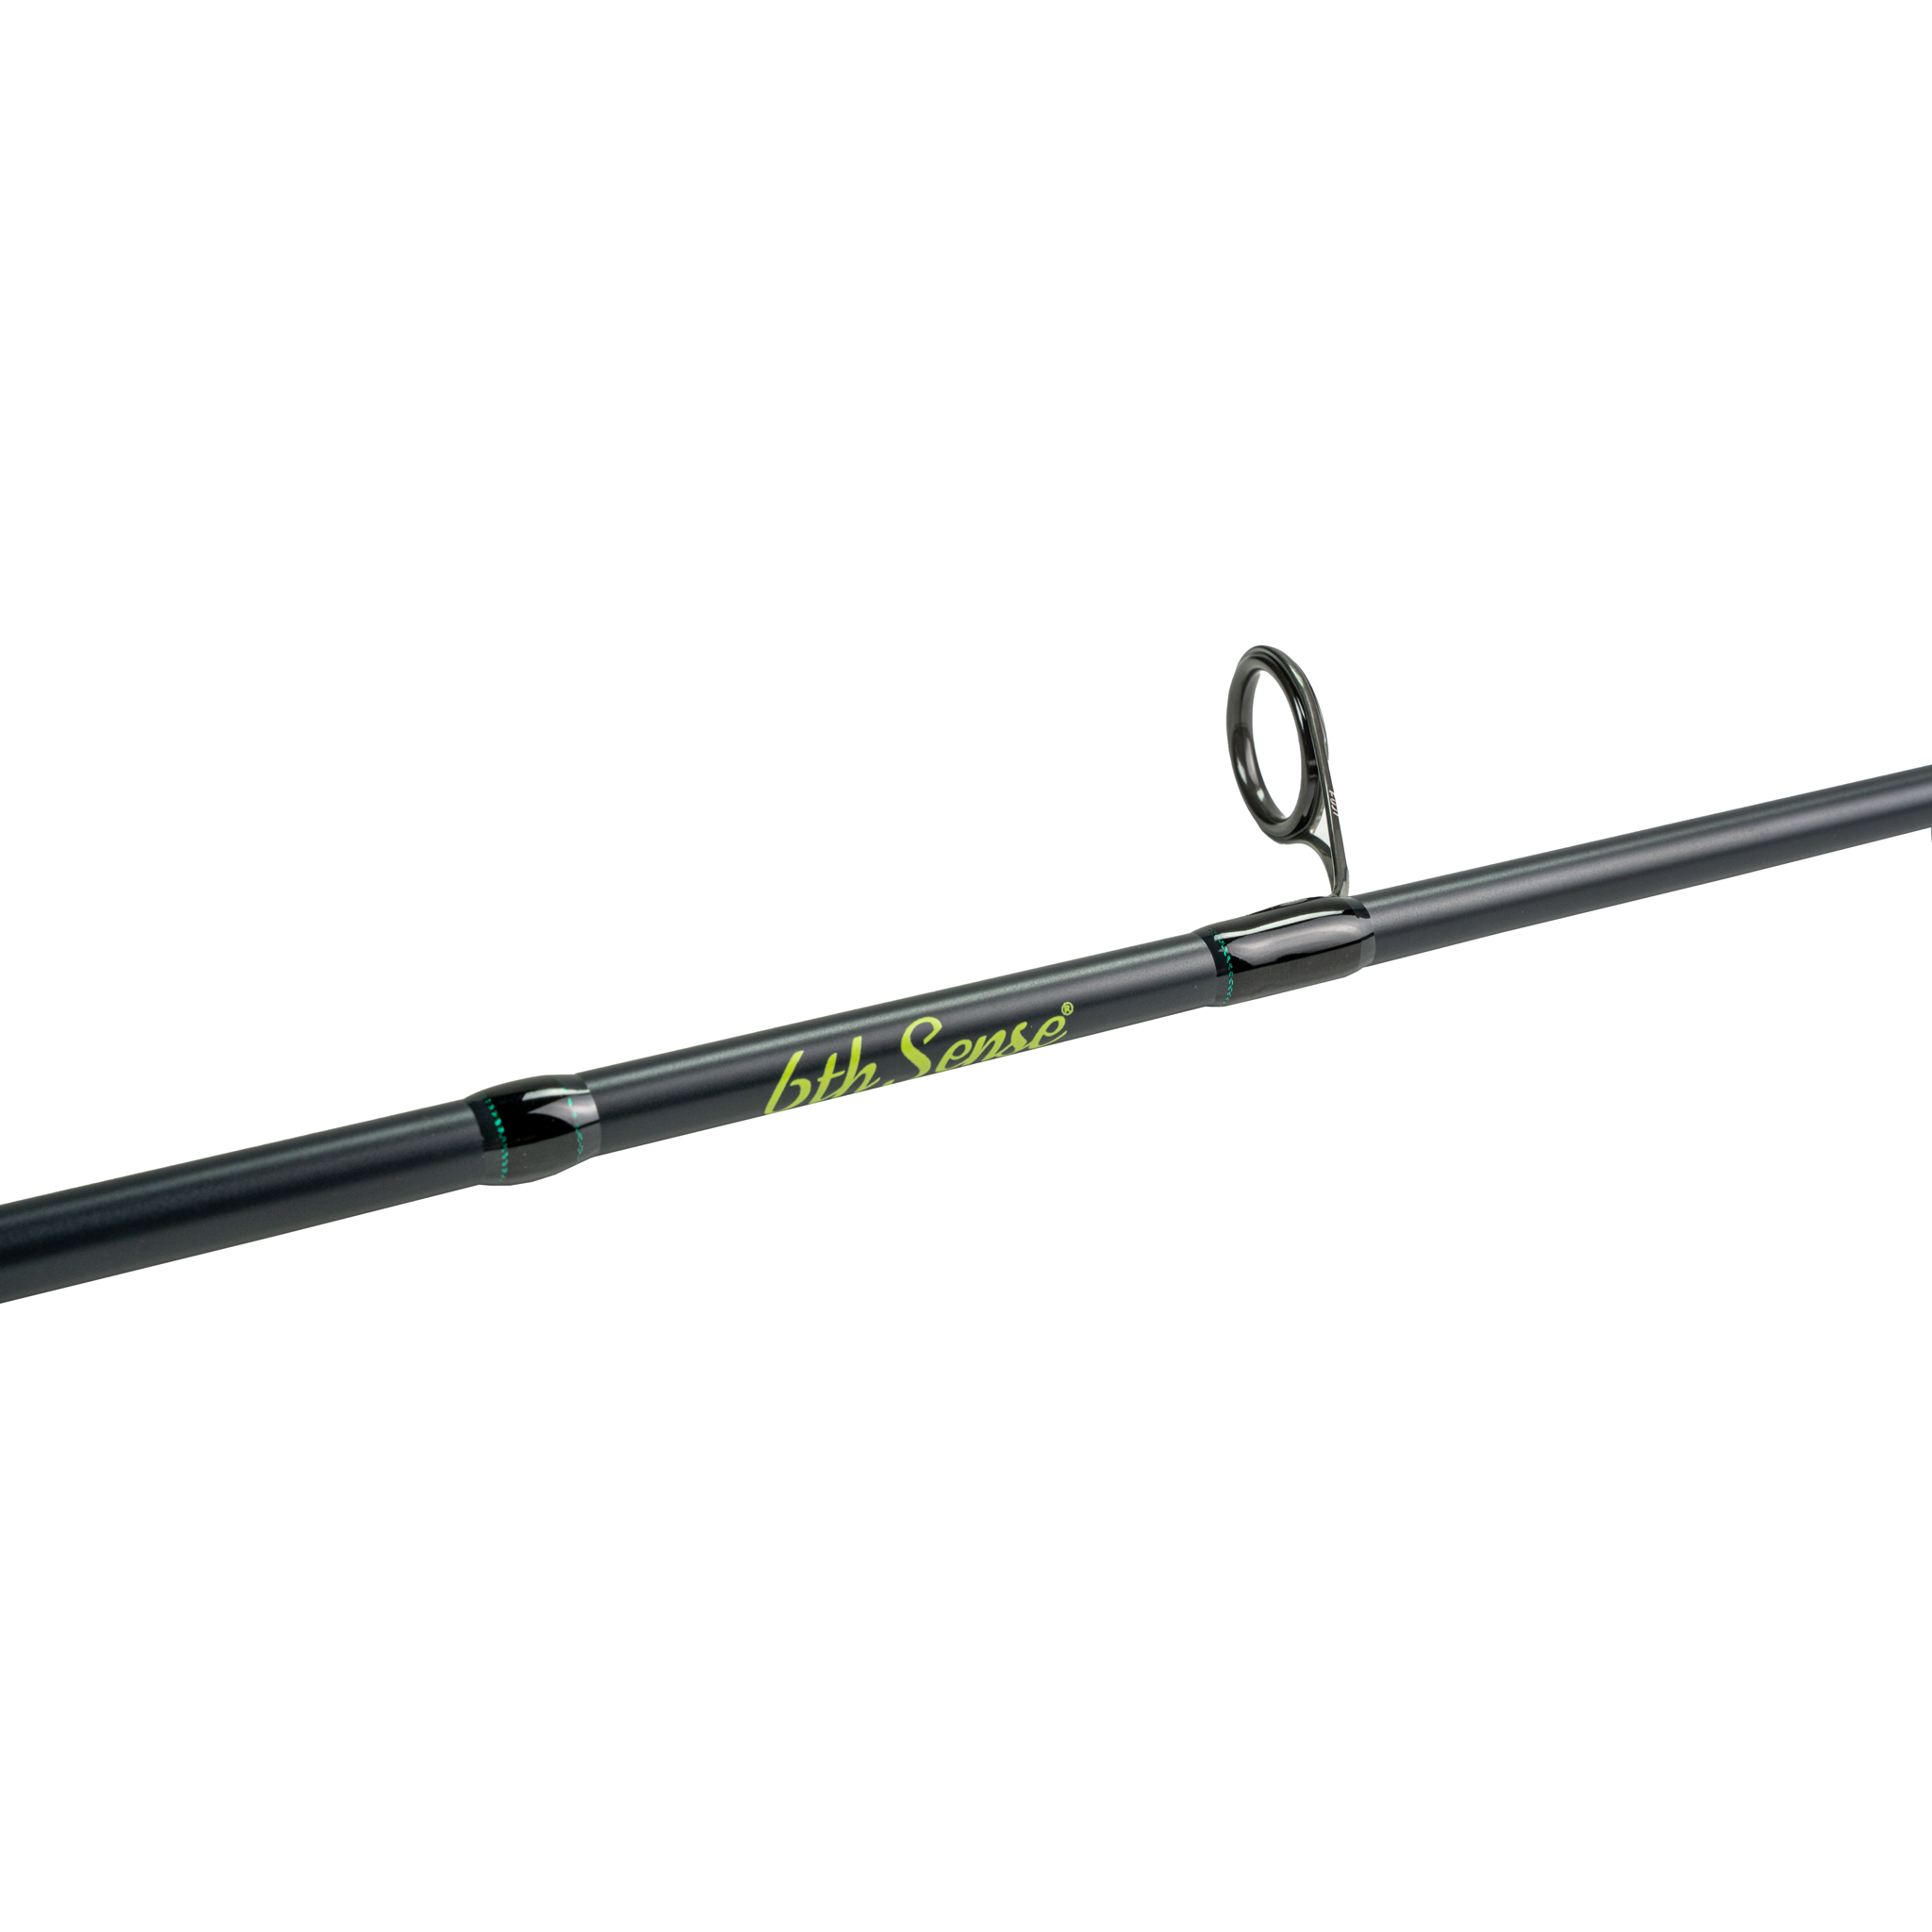 6th Sense Fishing - Heater Series Casting Rod - 7'0 Medium, Fast